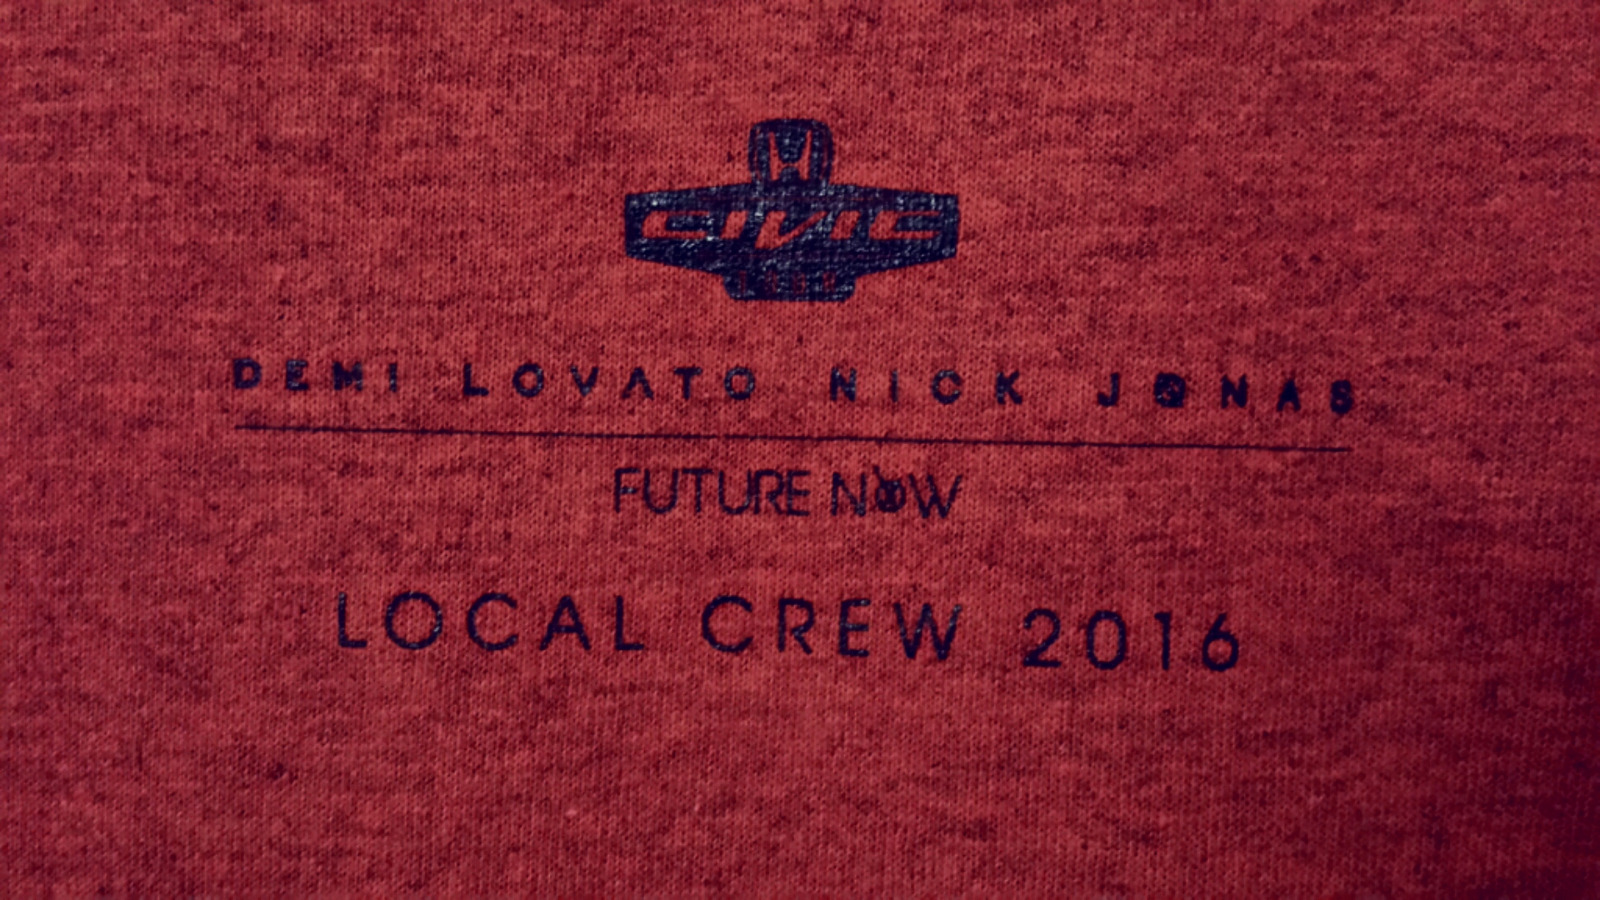 Demi Lovato Nick Jonas Future Now Crew Tour Shirt - Fun Gift Idea T-shirt